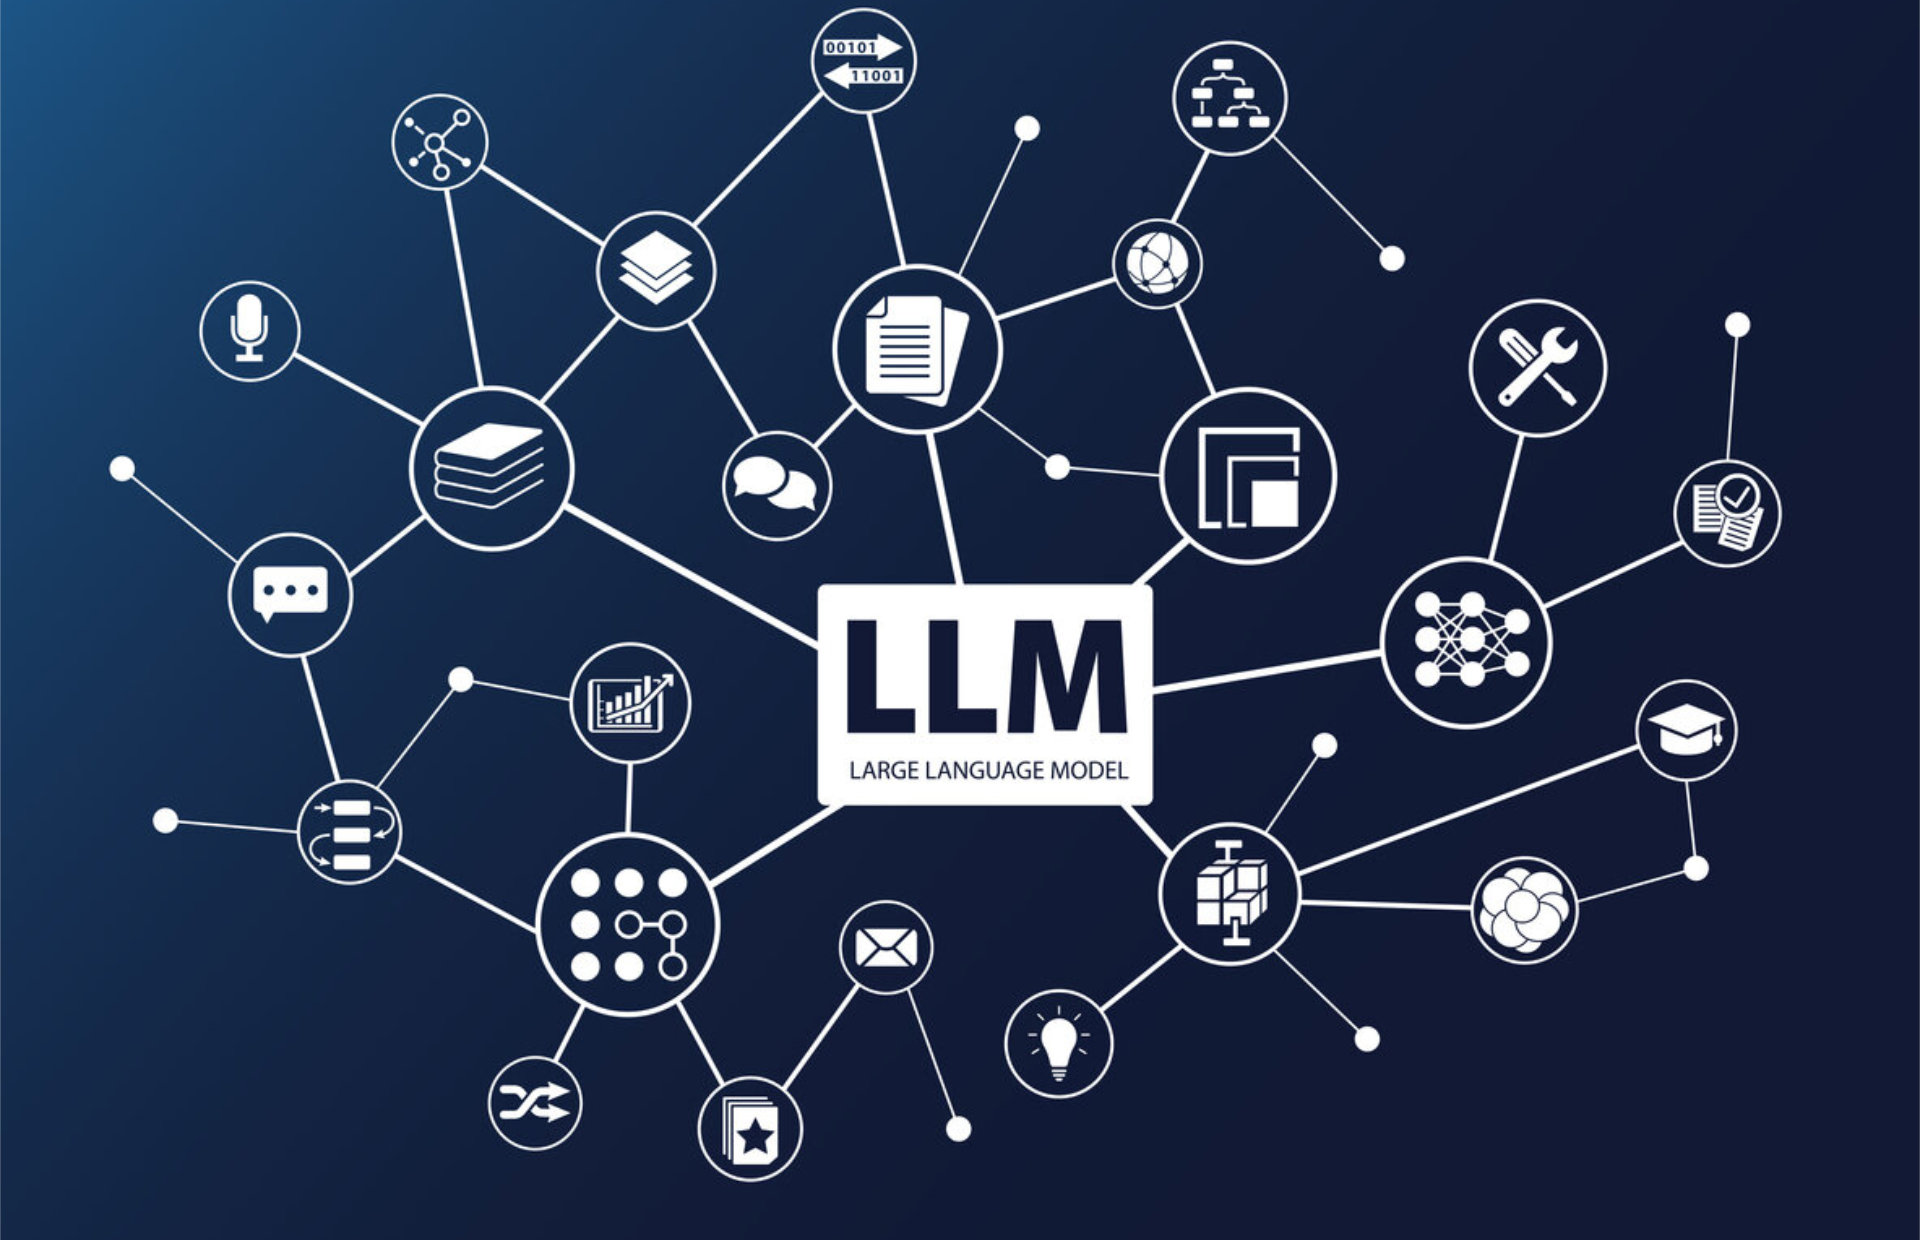 Microsoft SLM and LLM